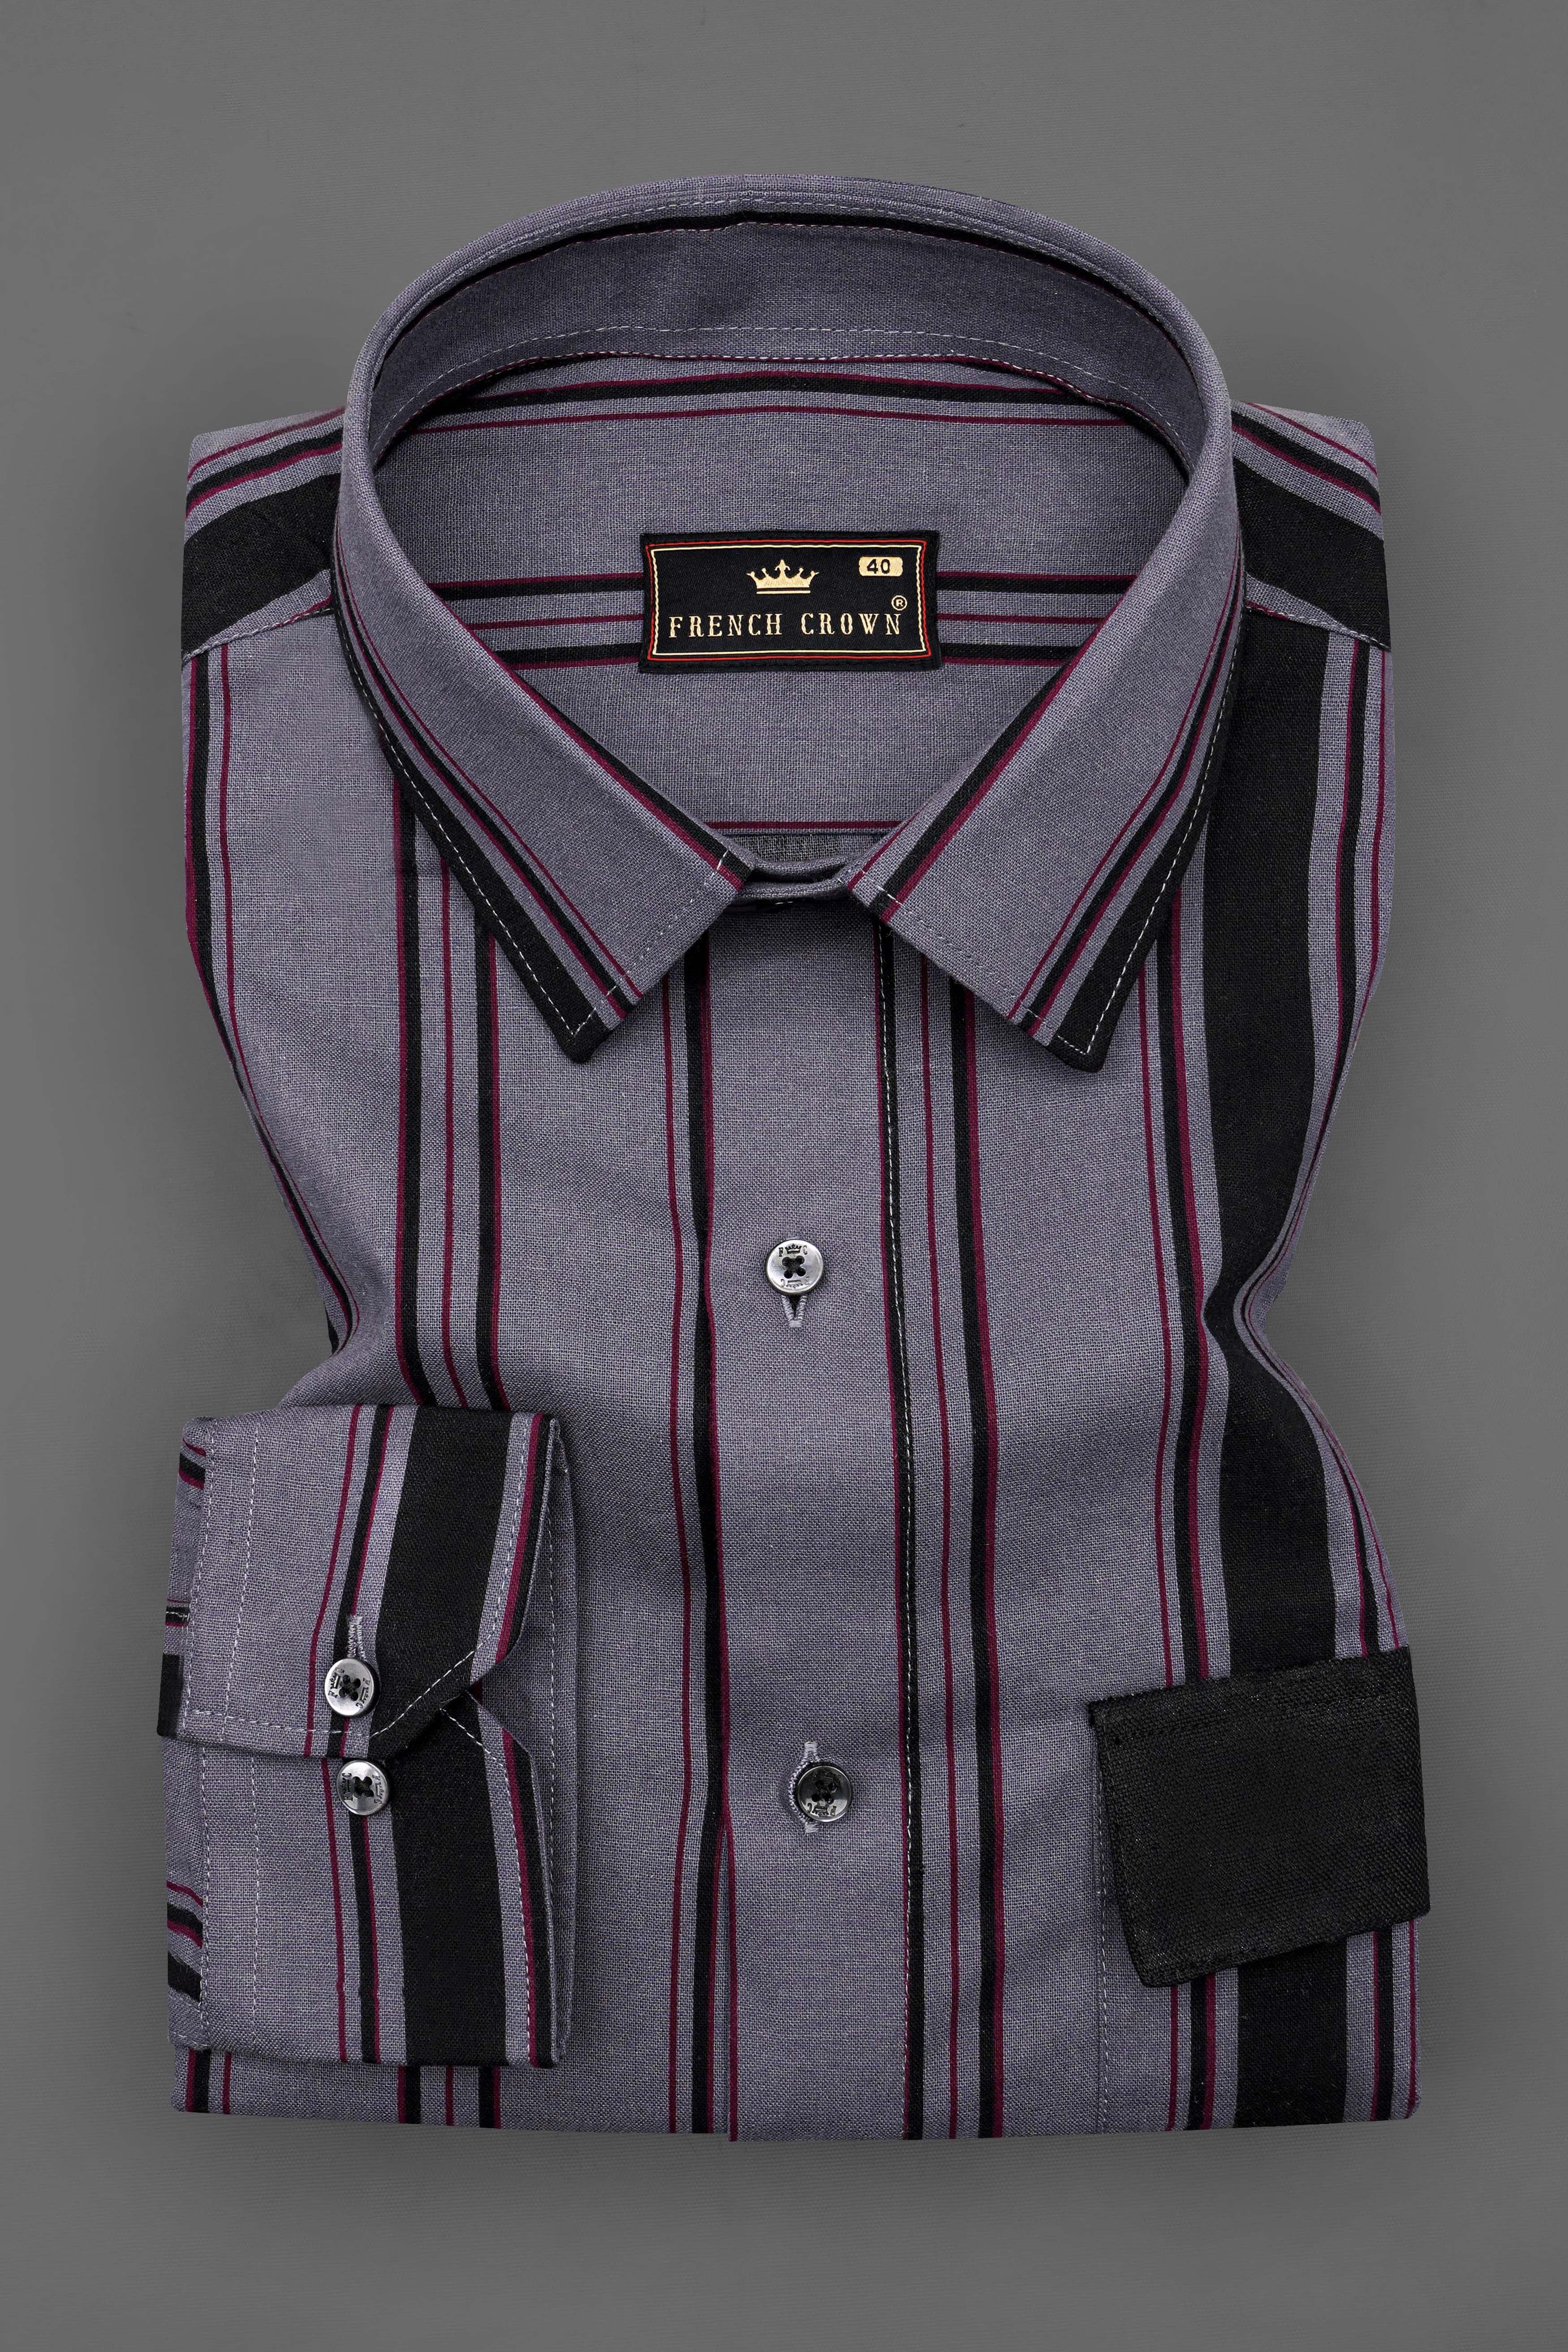 Mobster Gray and Black Striped Royal Oxford Designer Shirt